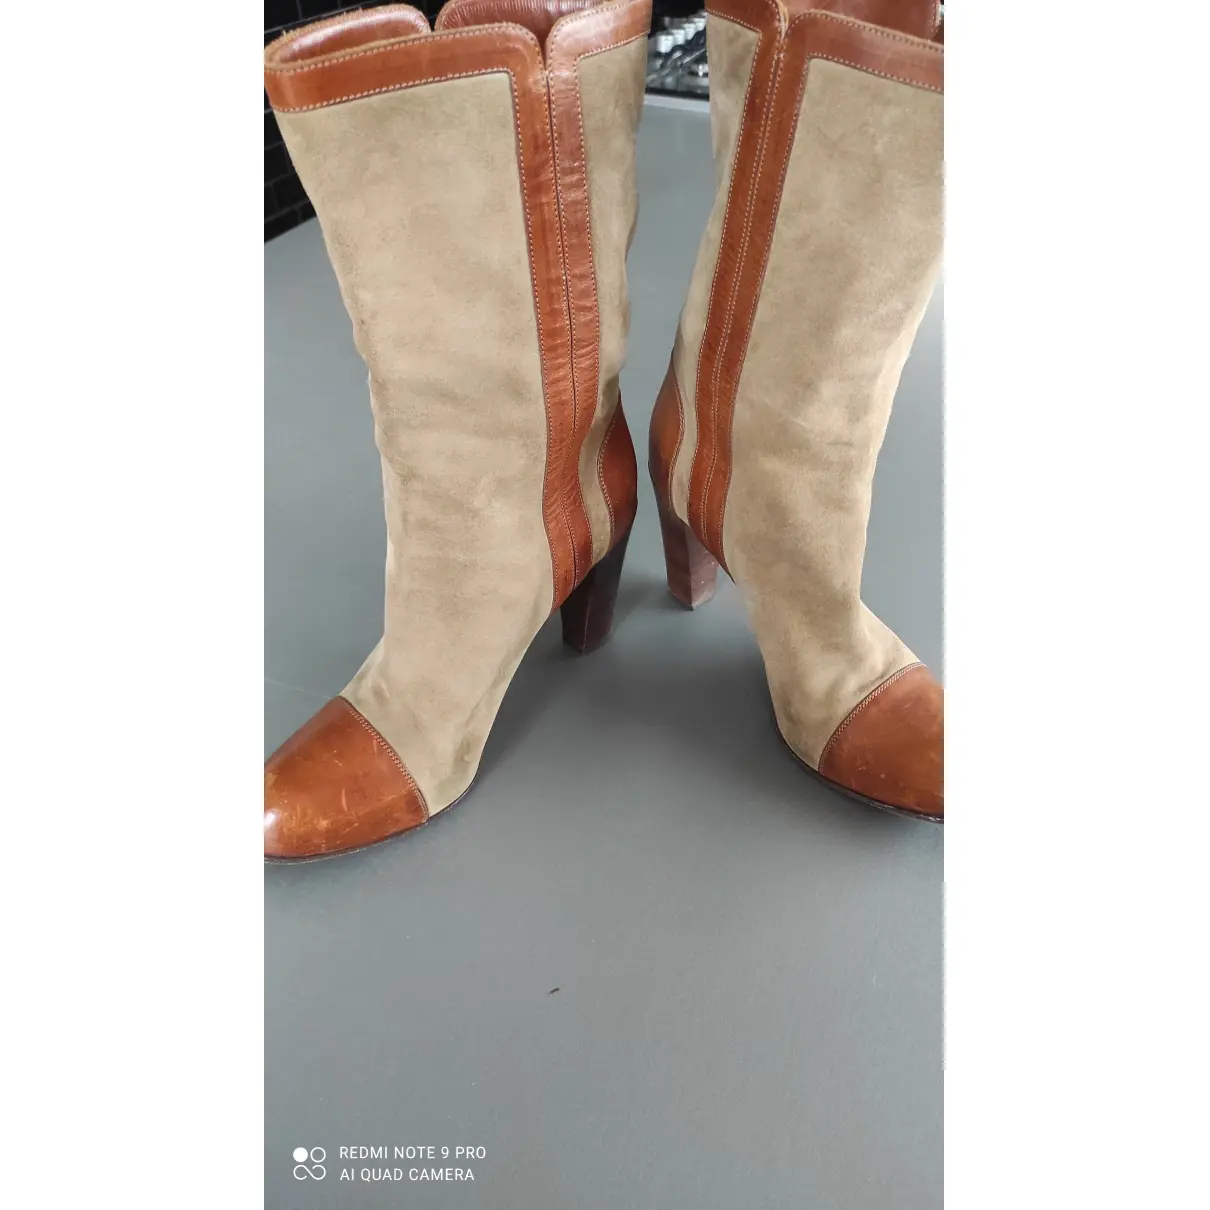 Luxury Sartore Boots Women